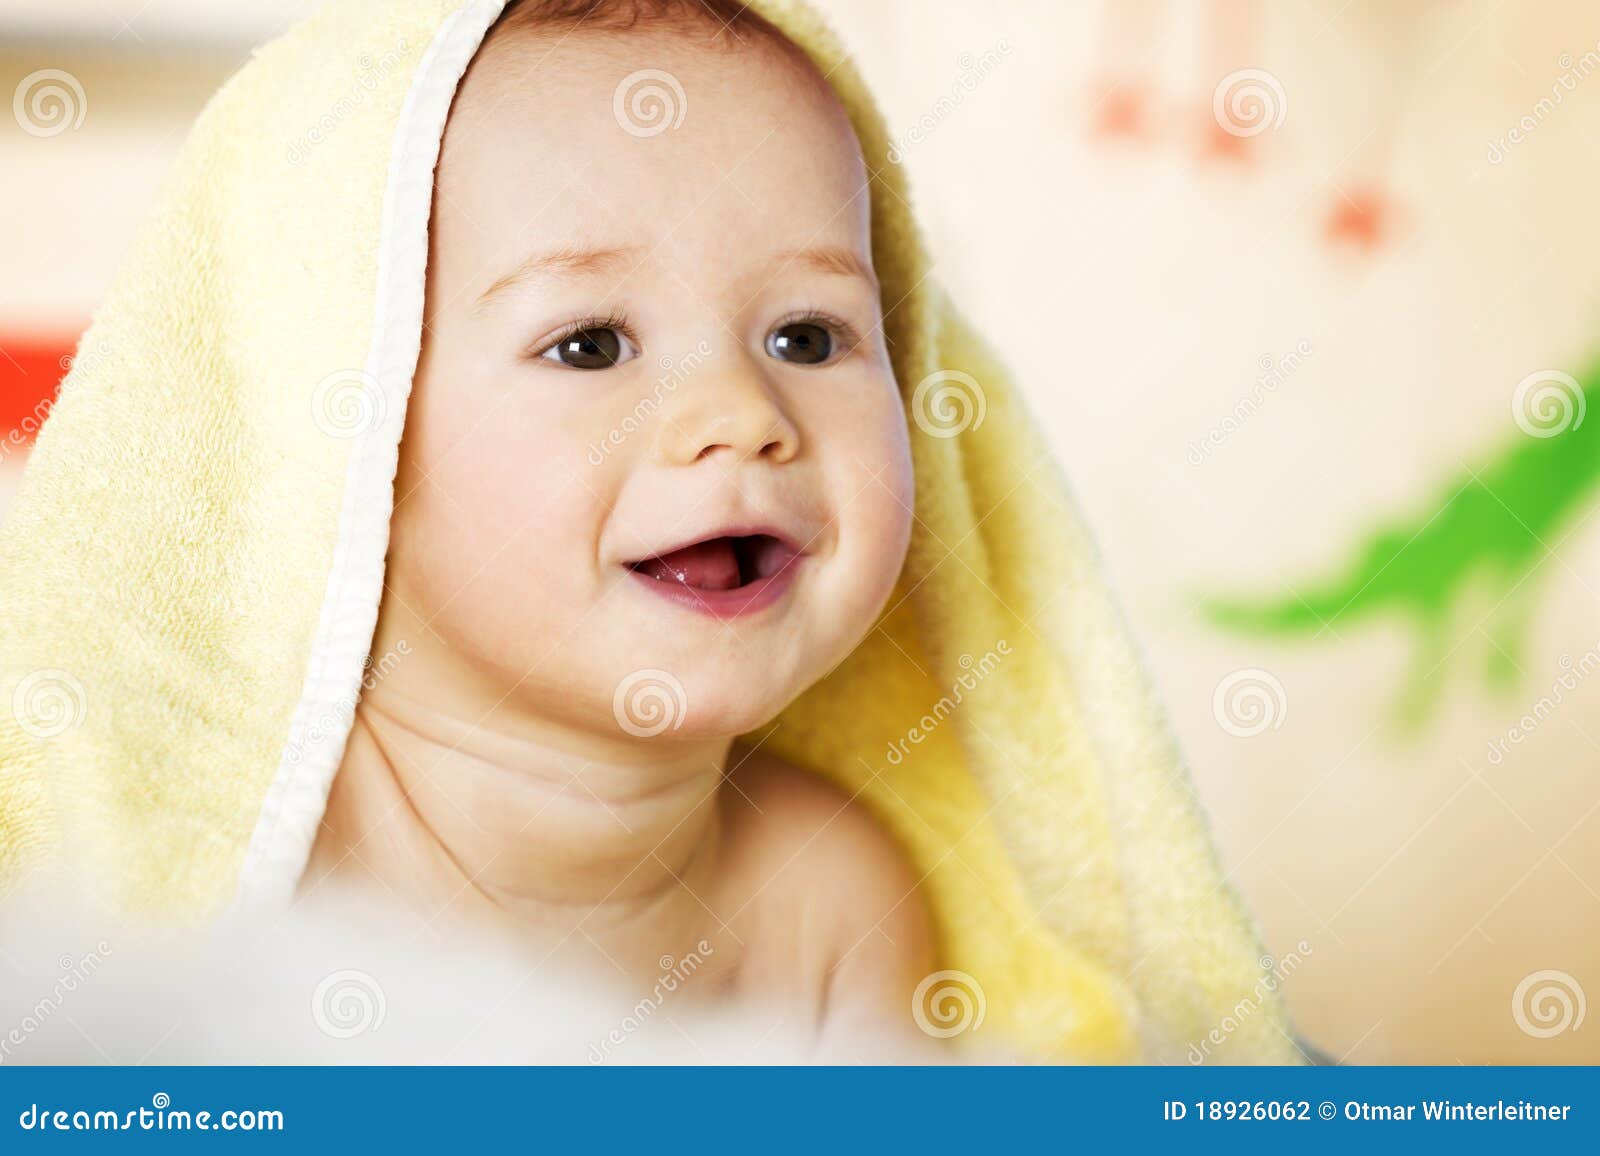 Baby under blanket stock image. Image of cheerful, happy 